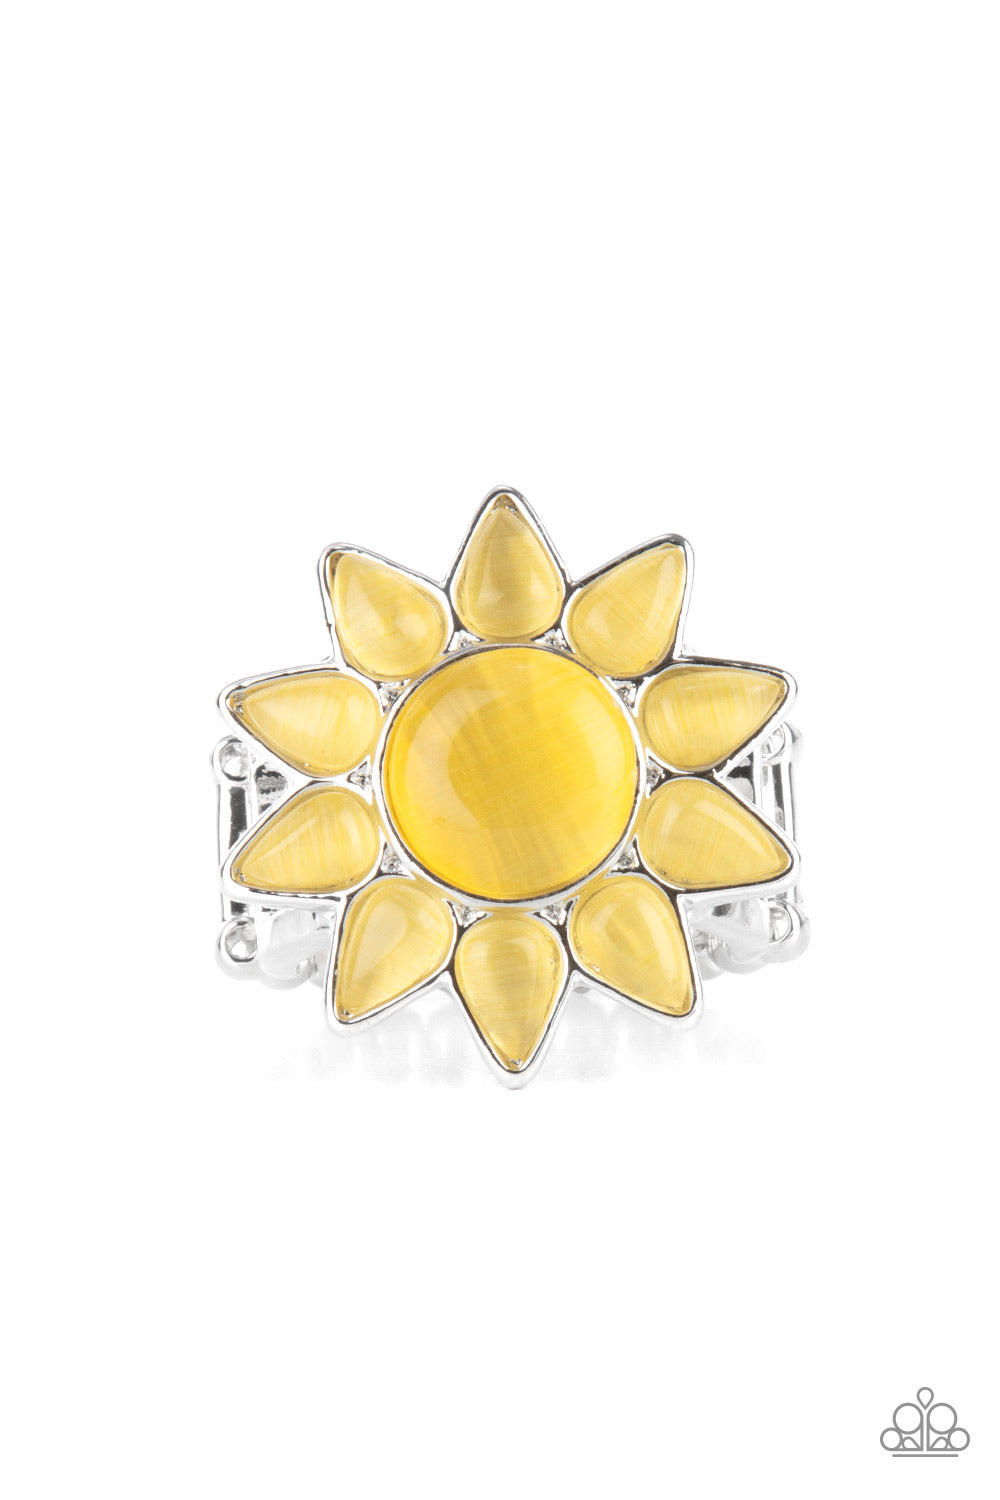 Blossoming Sunbeams - Yellow (Cat's Eye Stone) Ring